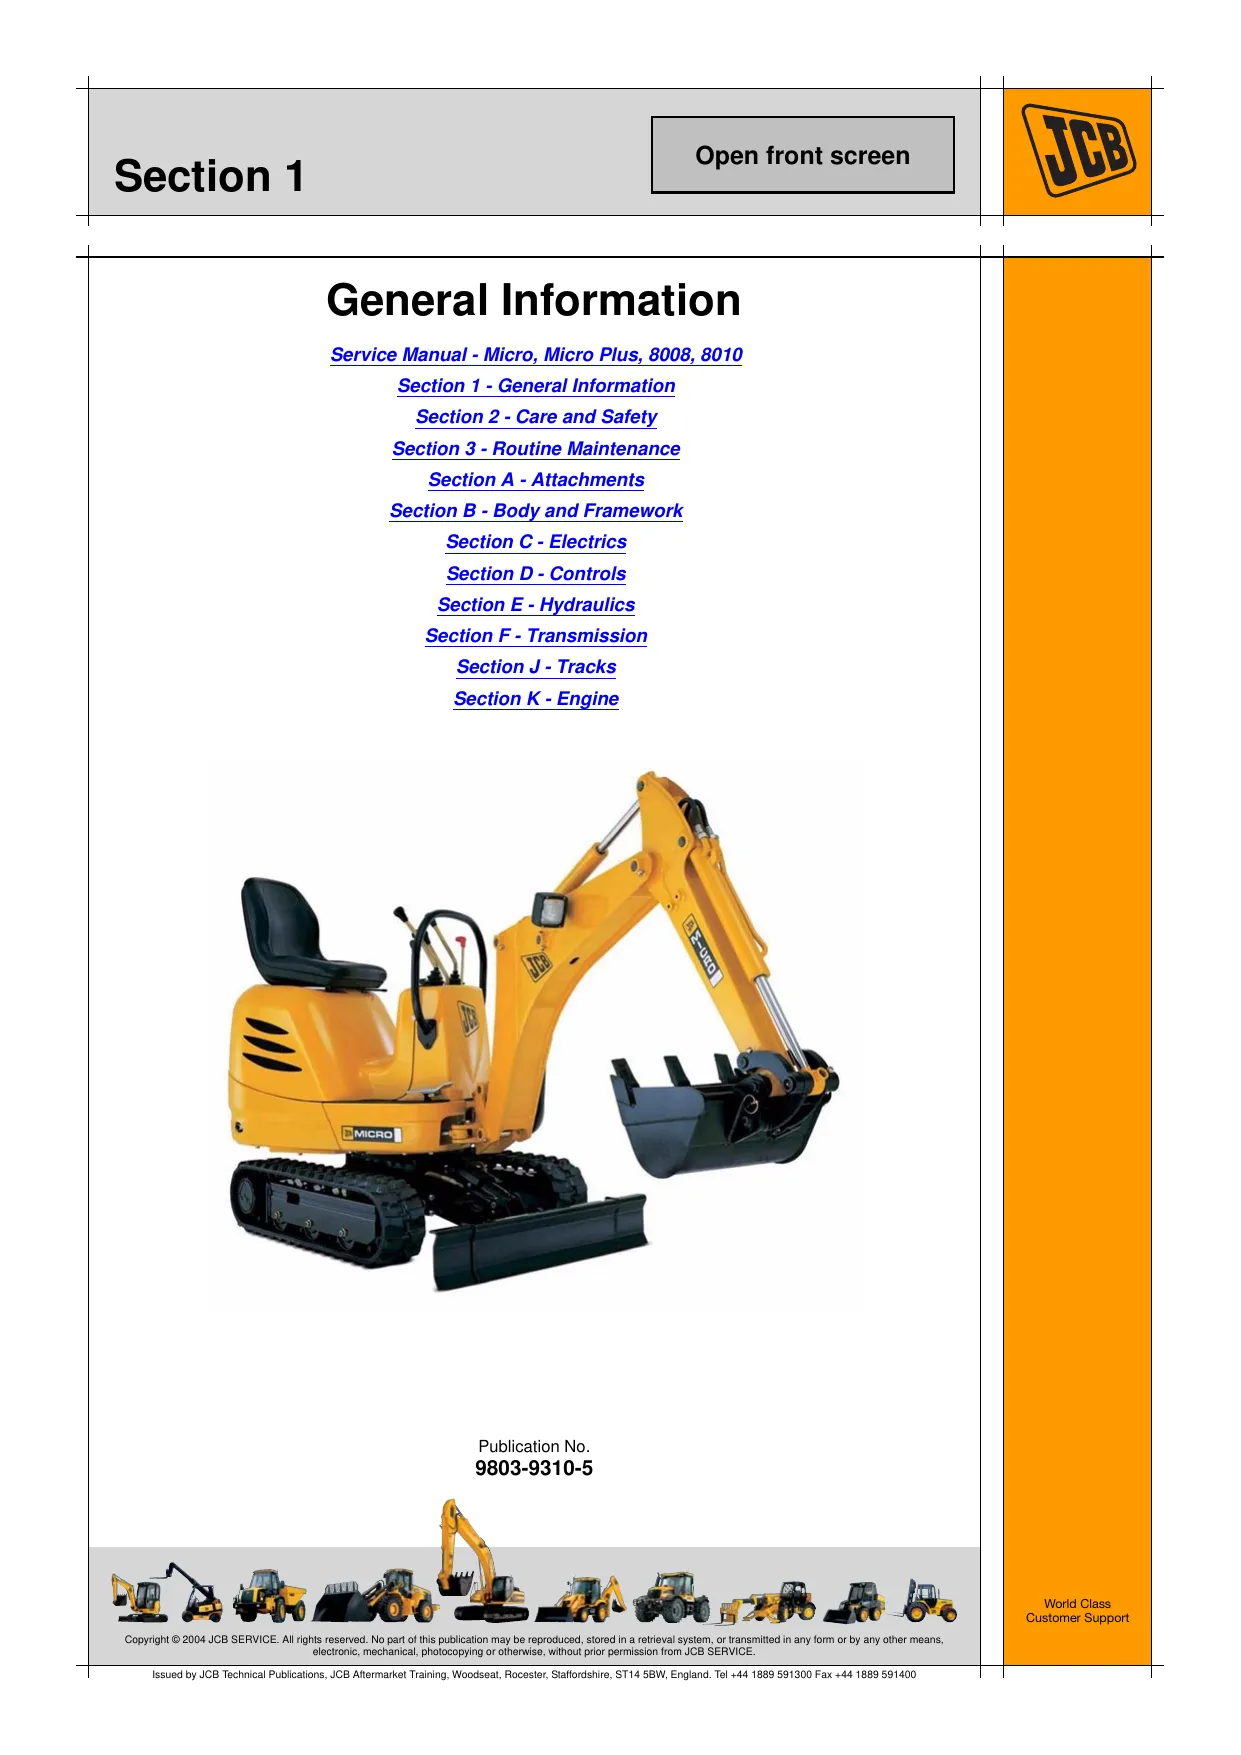 JCB Micro, Micro Plus, 8008, 8010 excavator manual Preview image 1